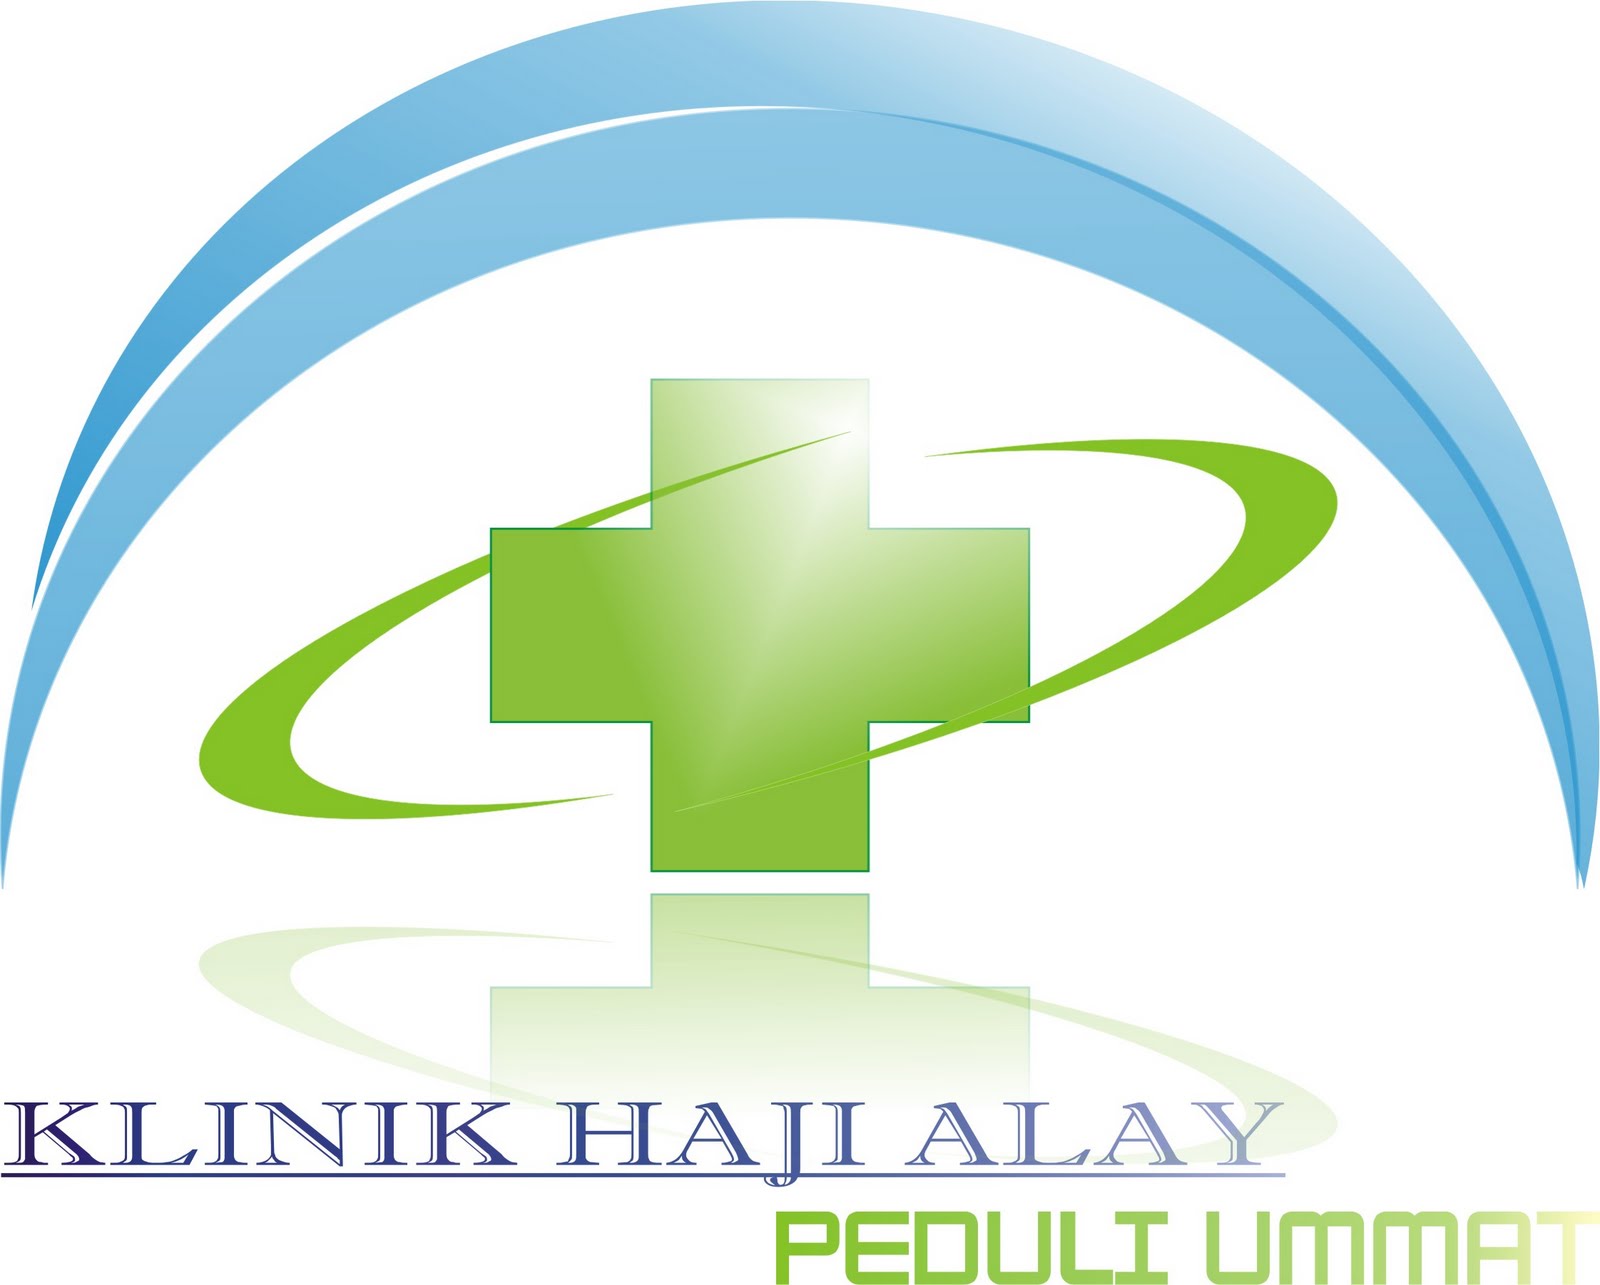 Ardiz.blog: Contoh Logo : Klinik Haji Alay Peduli Ummat